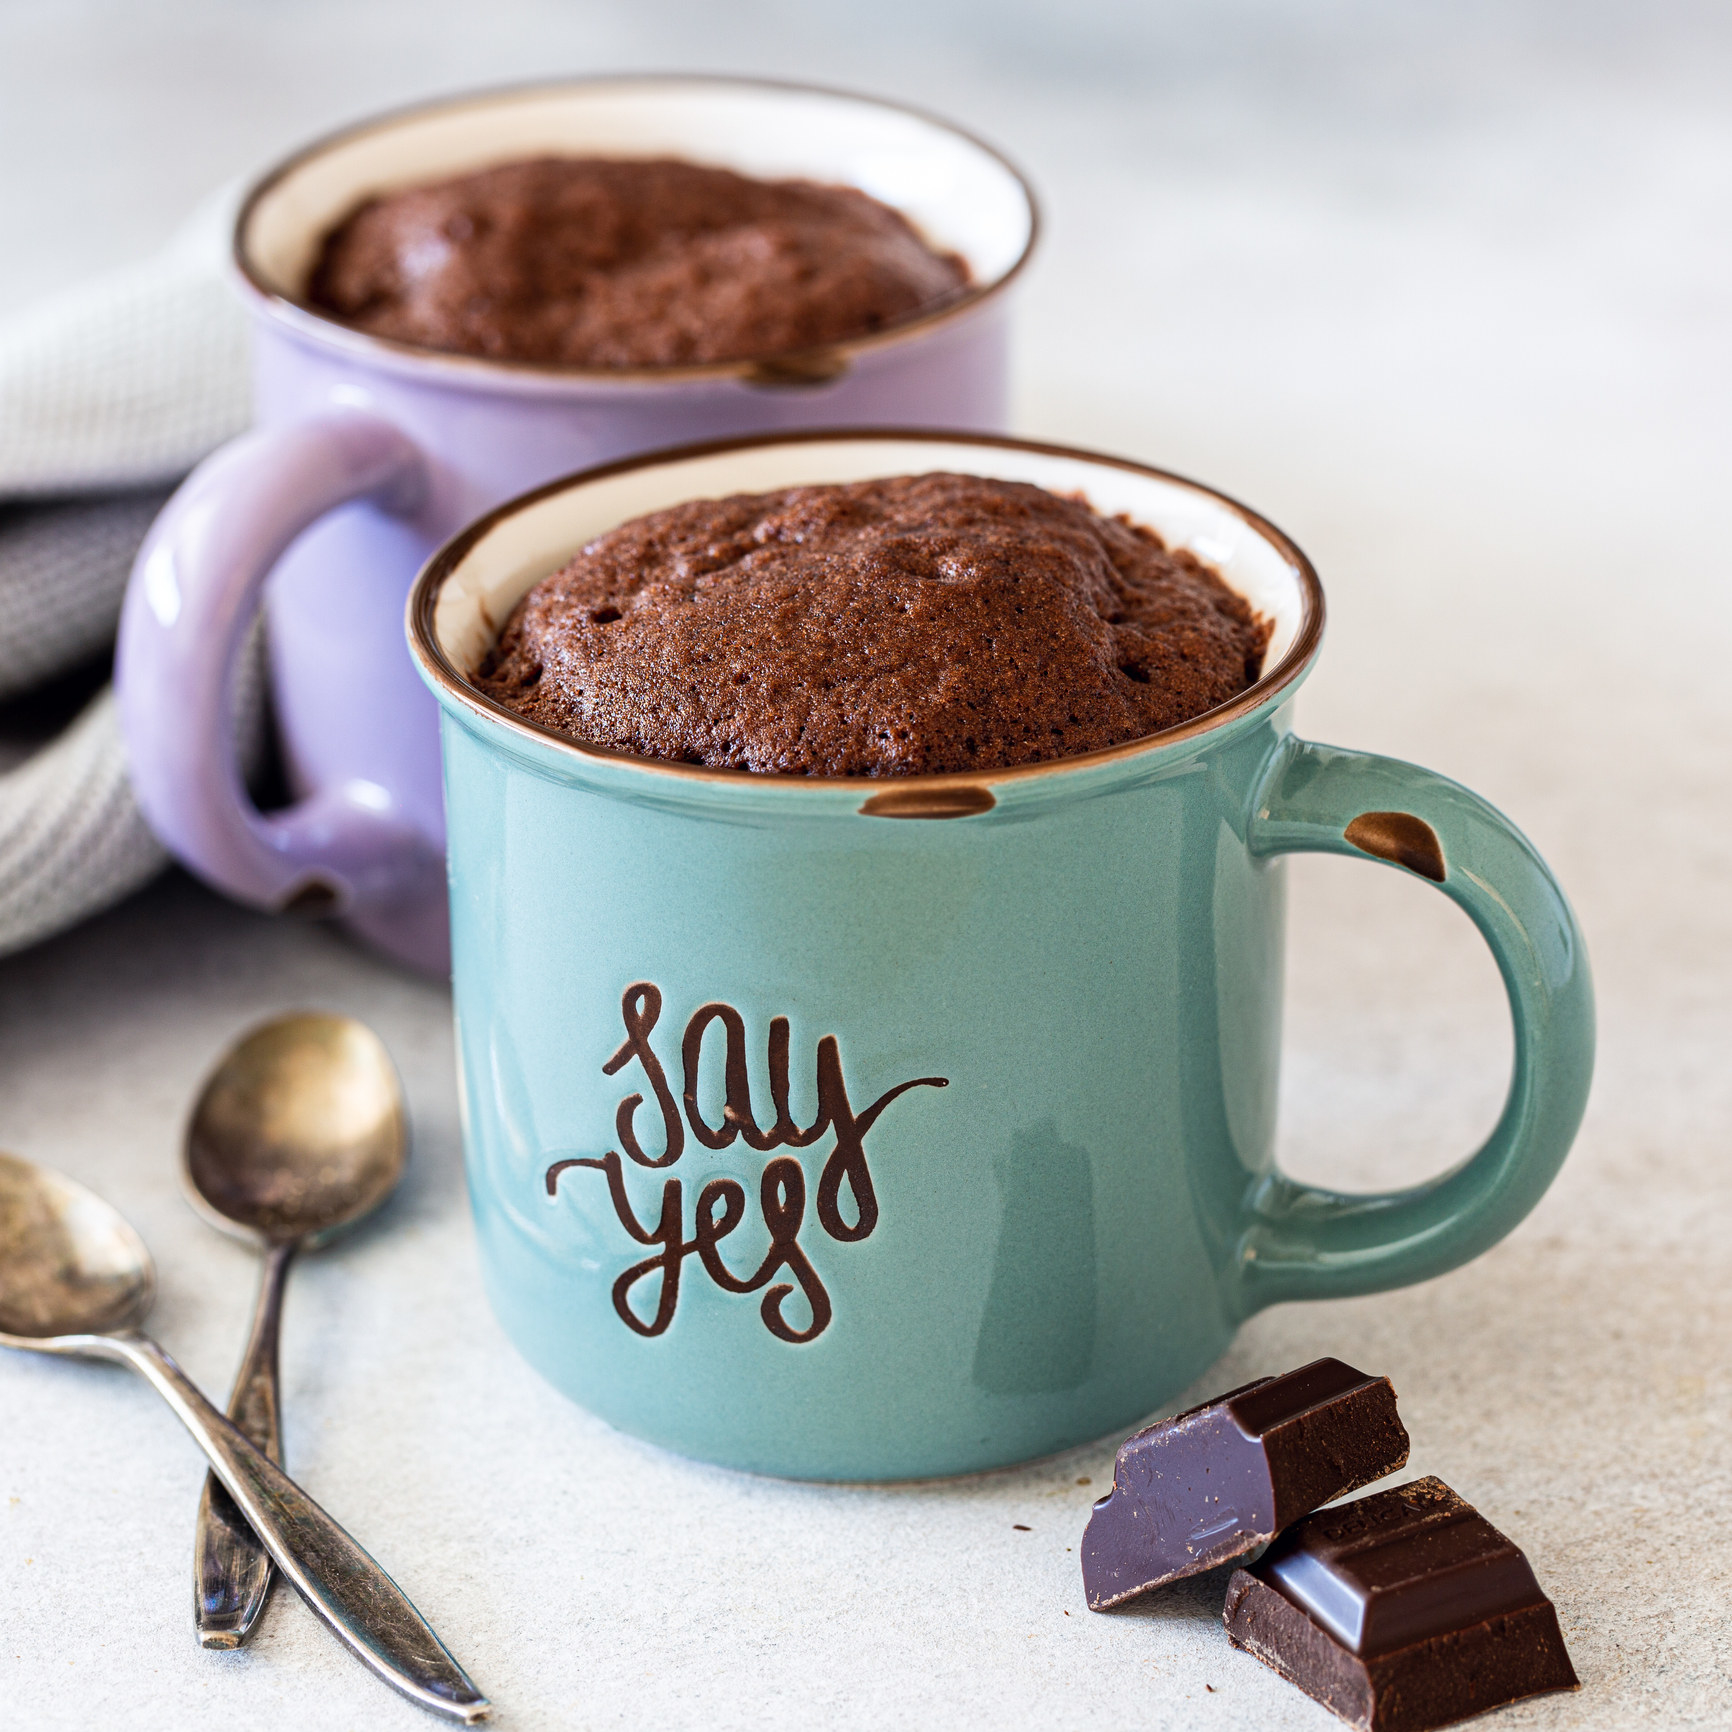 chocolate cakes in a mug